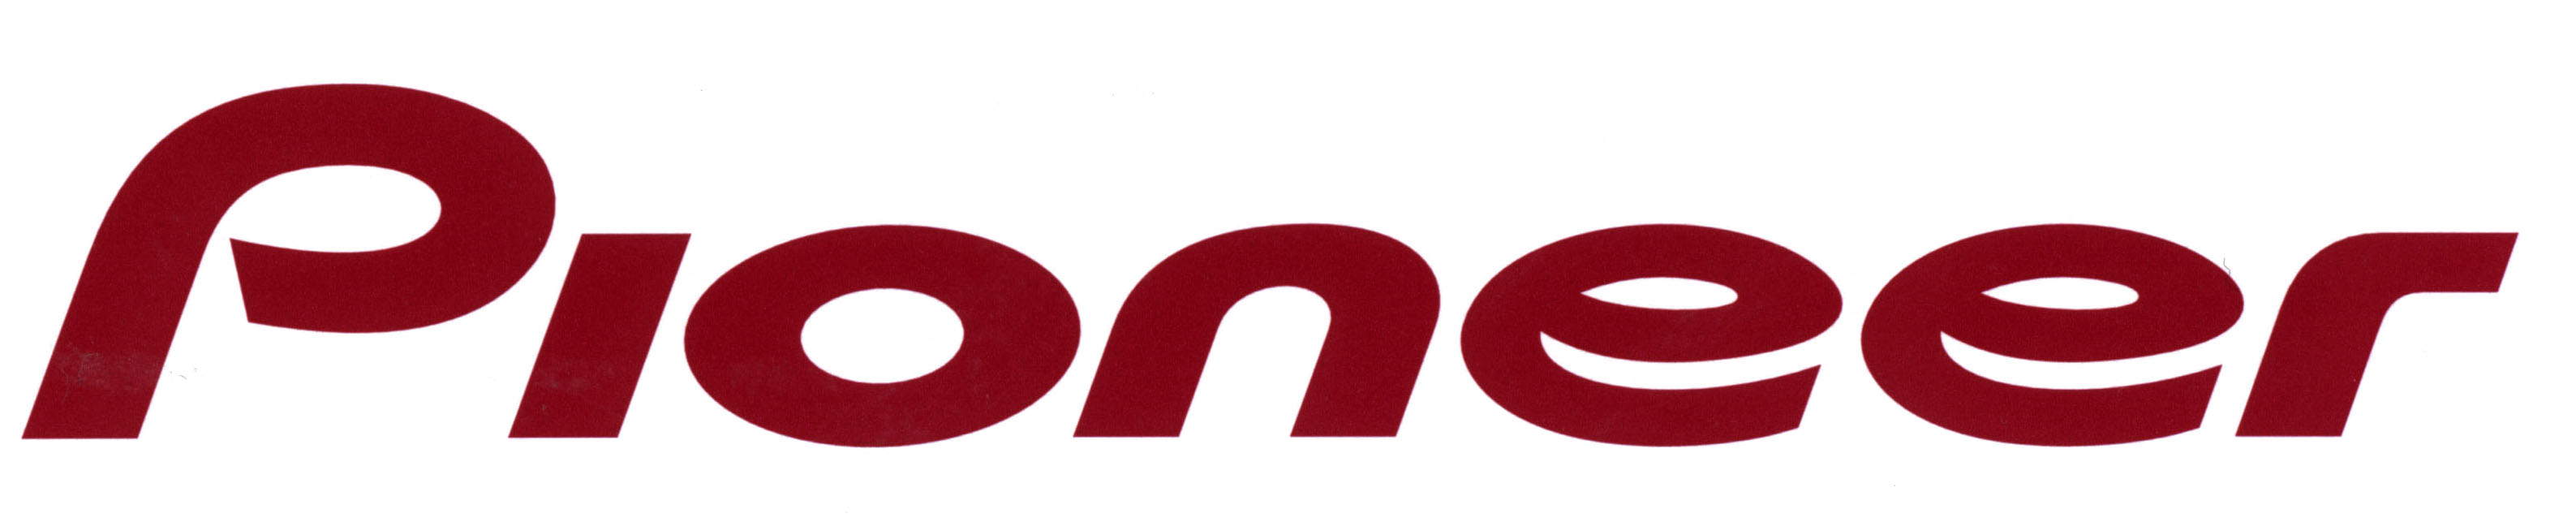 pionieri Logo photo - 1